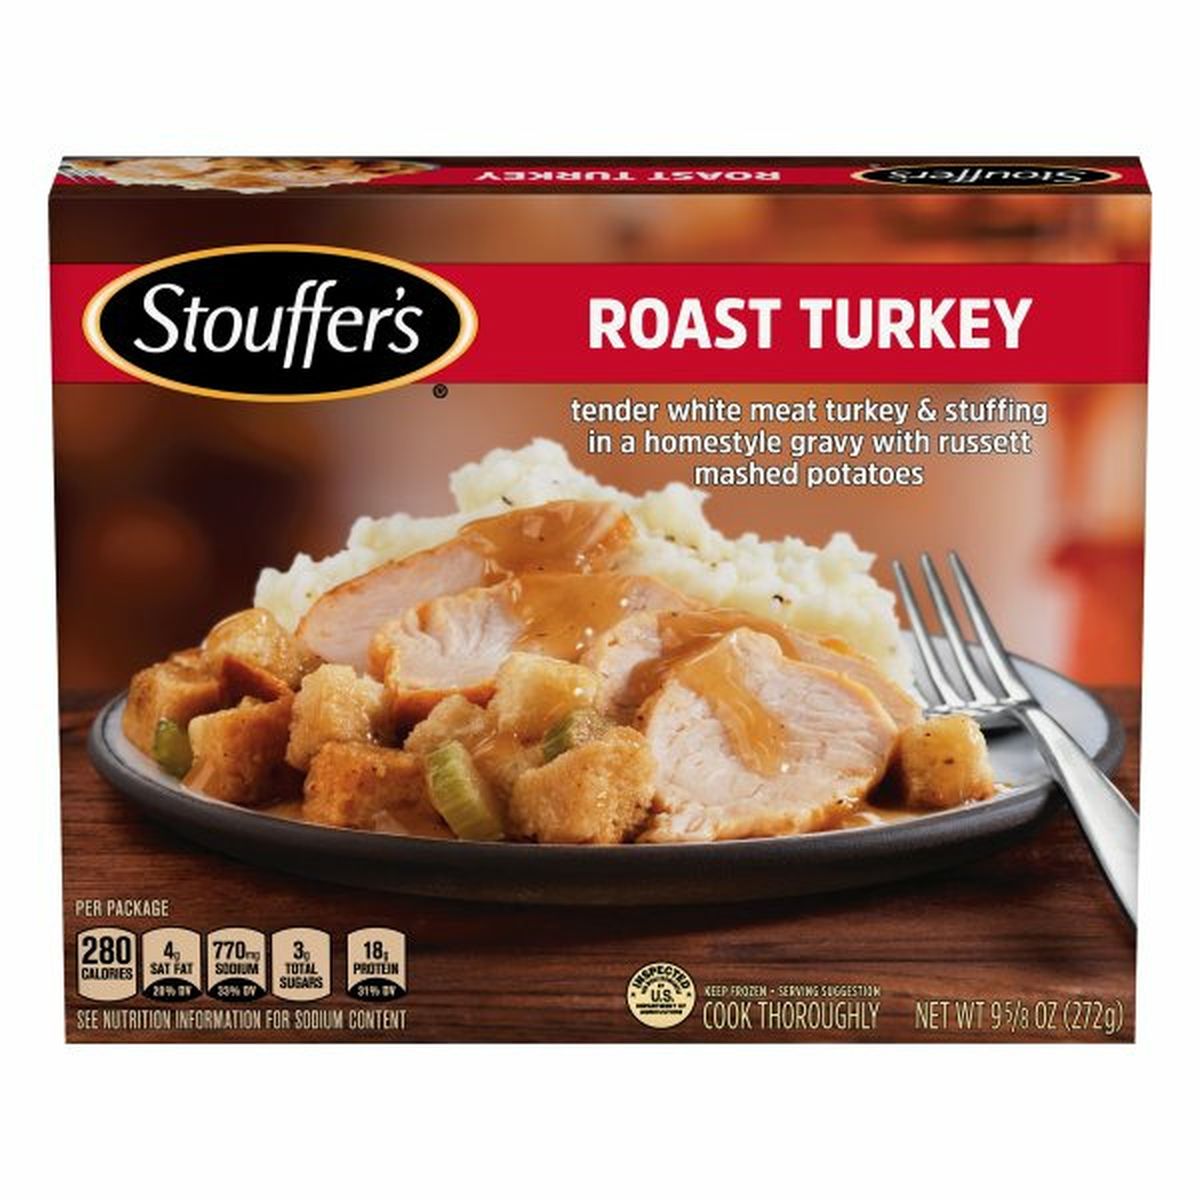 Calories in Stouffer's Roast Turkey